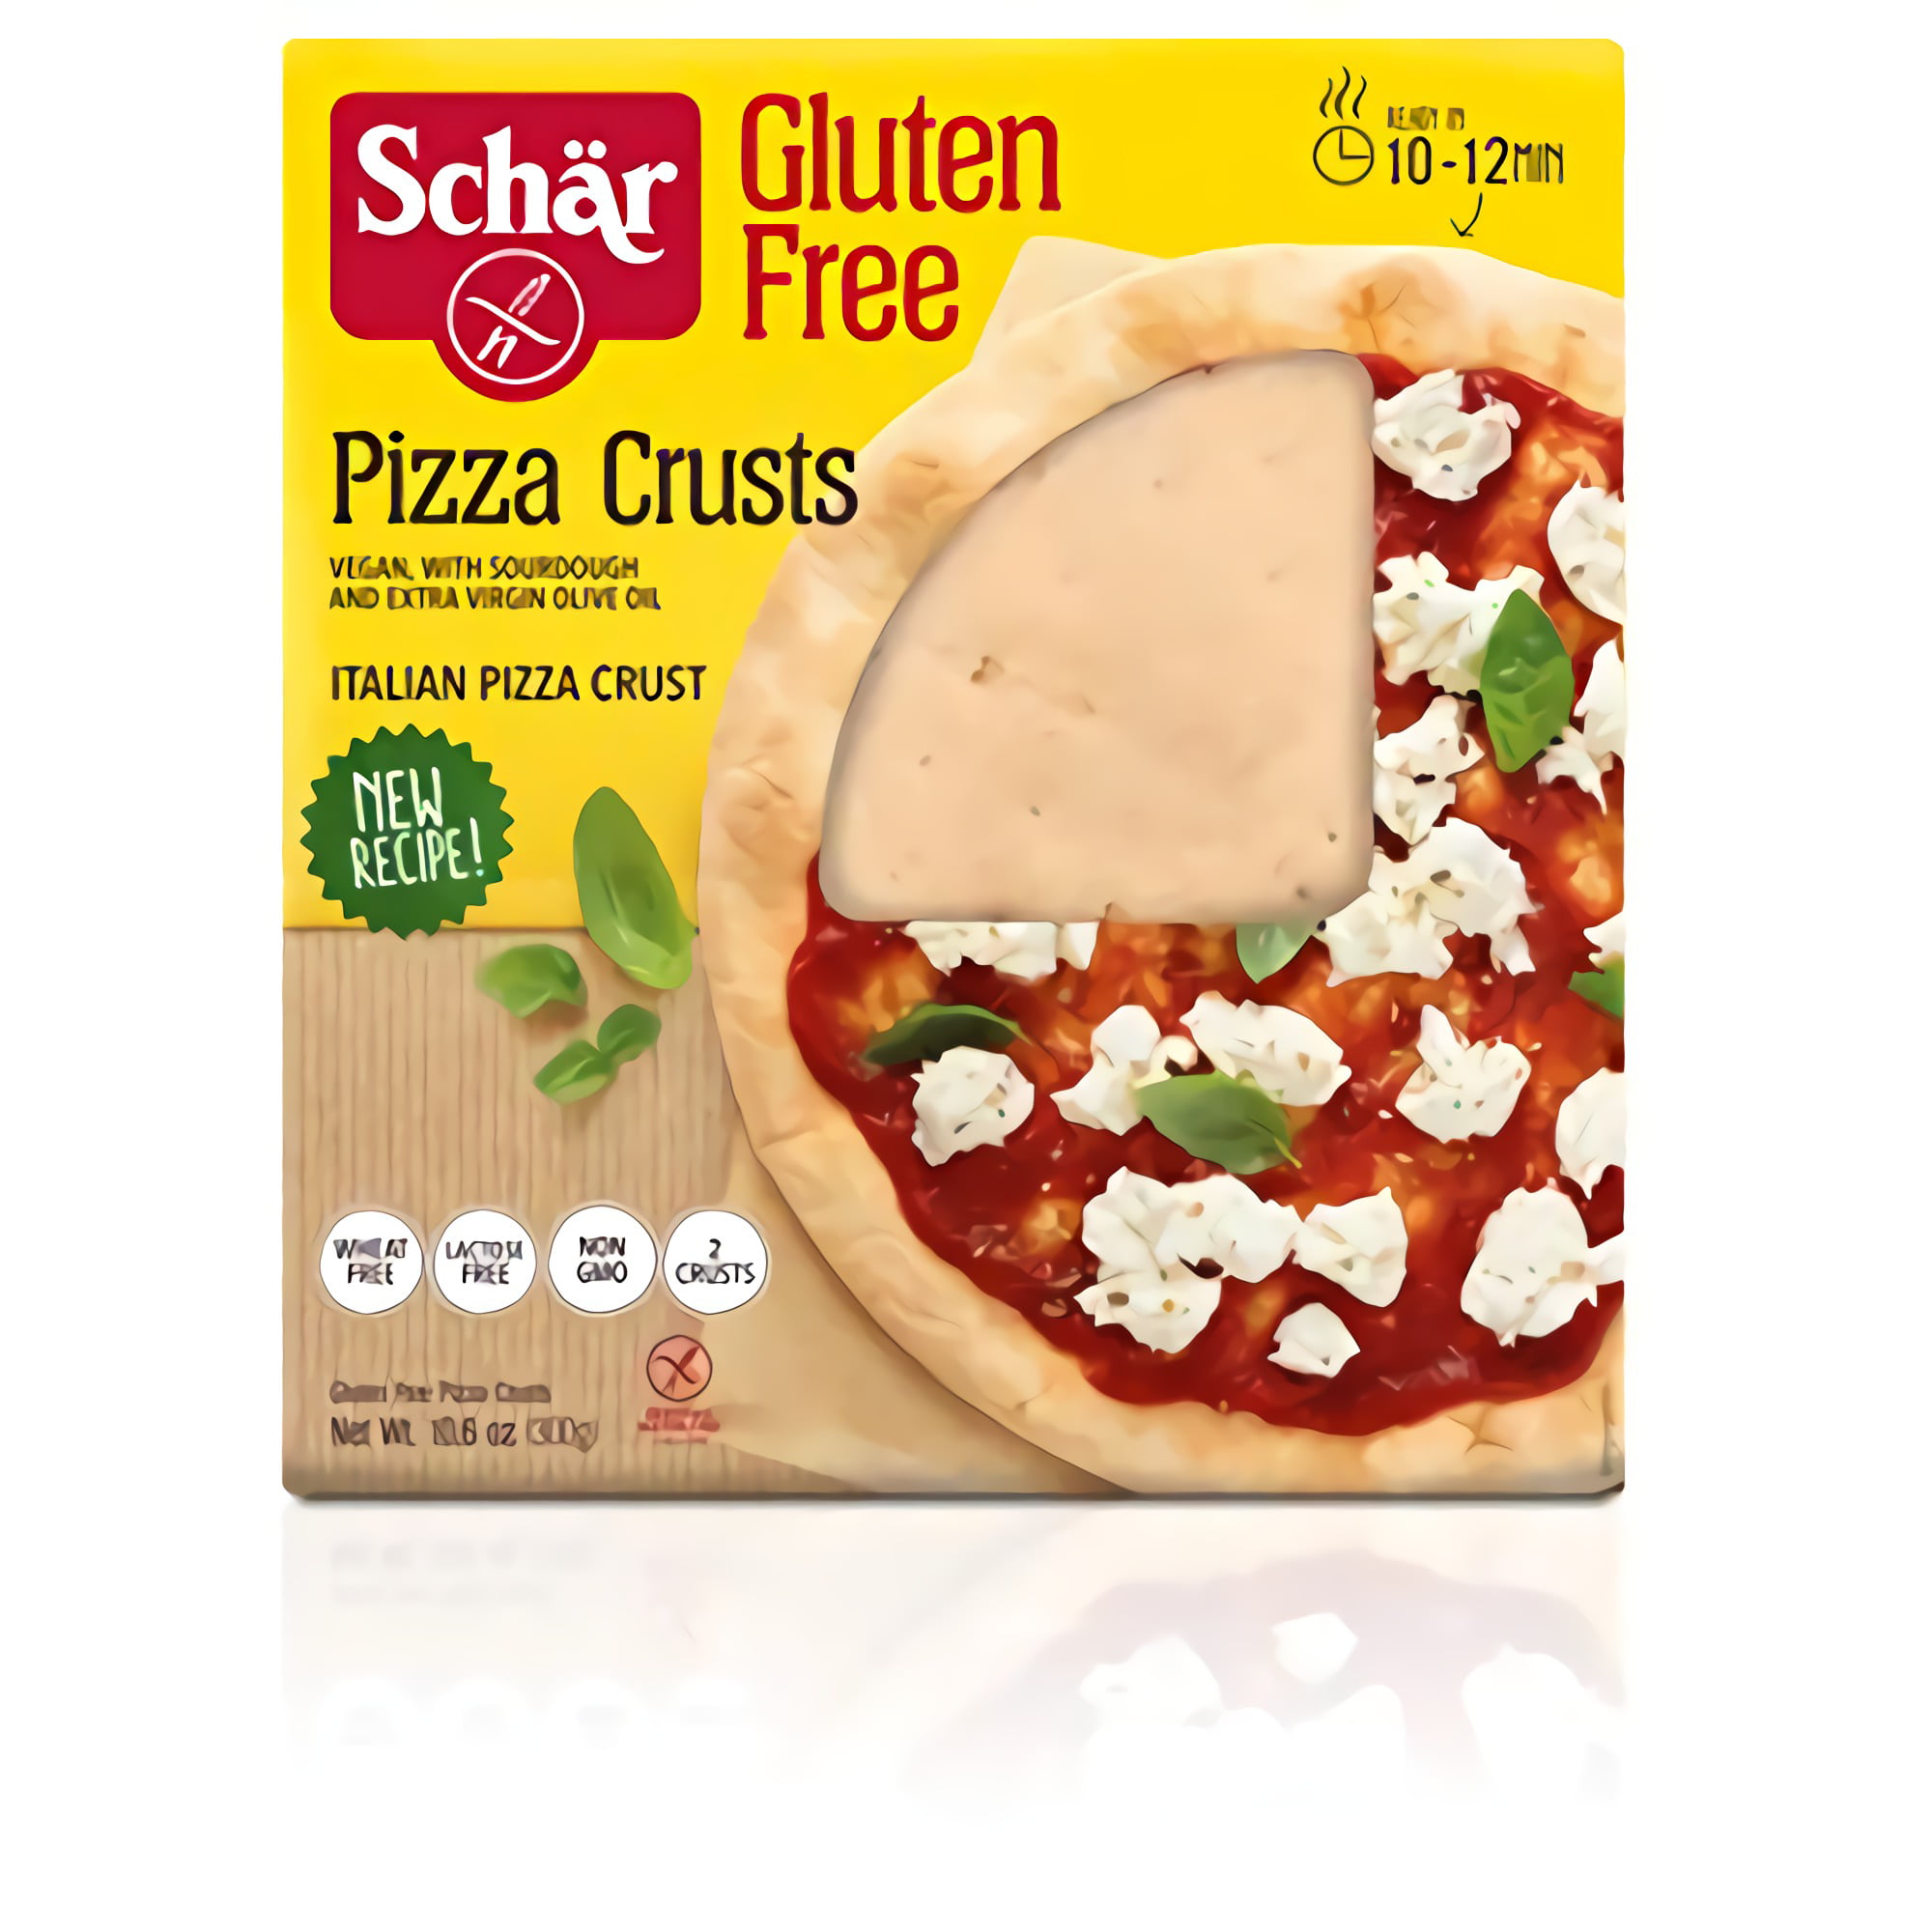 Pizza - Base de pizza Sin gluten - Schär - 300 g (2x 150 g)